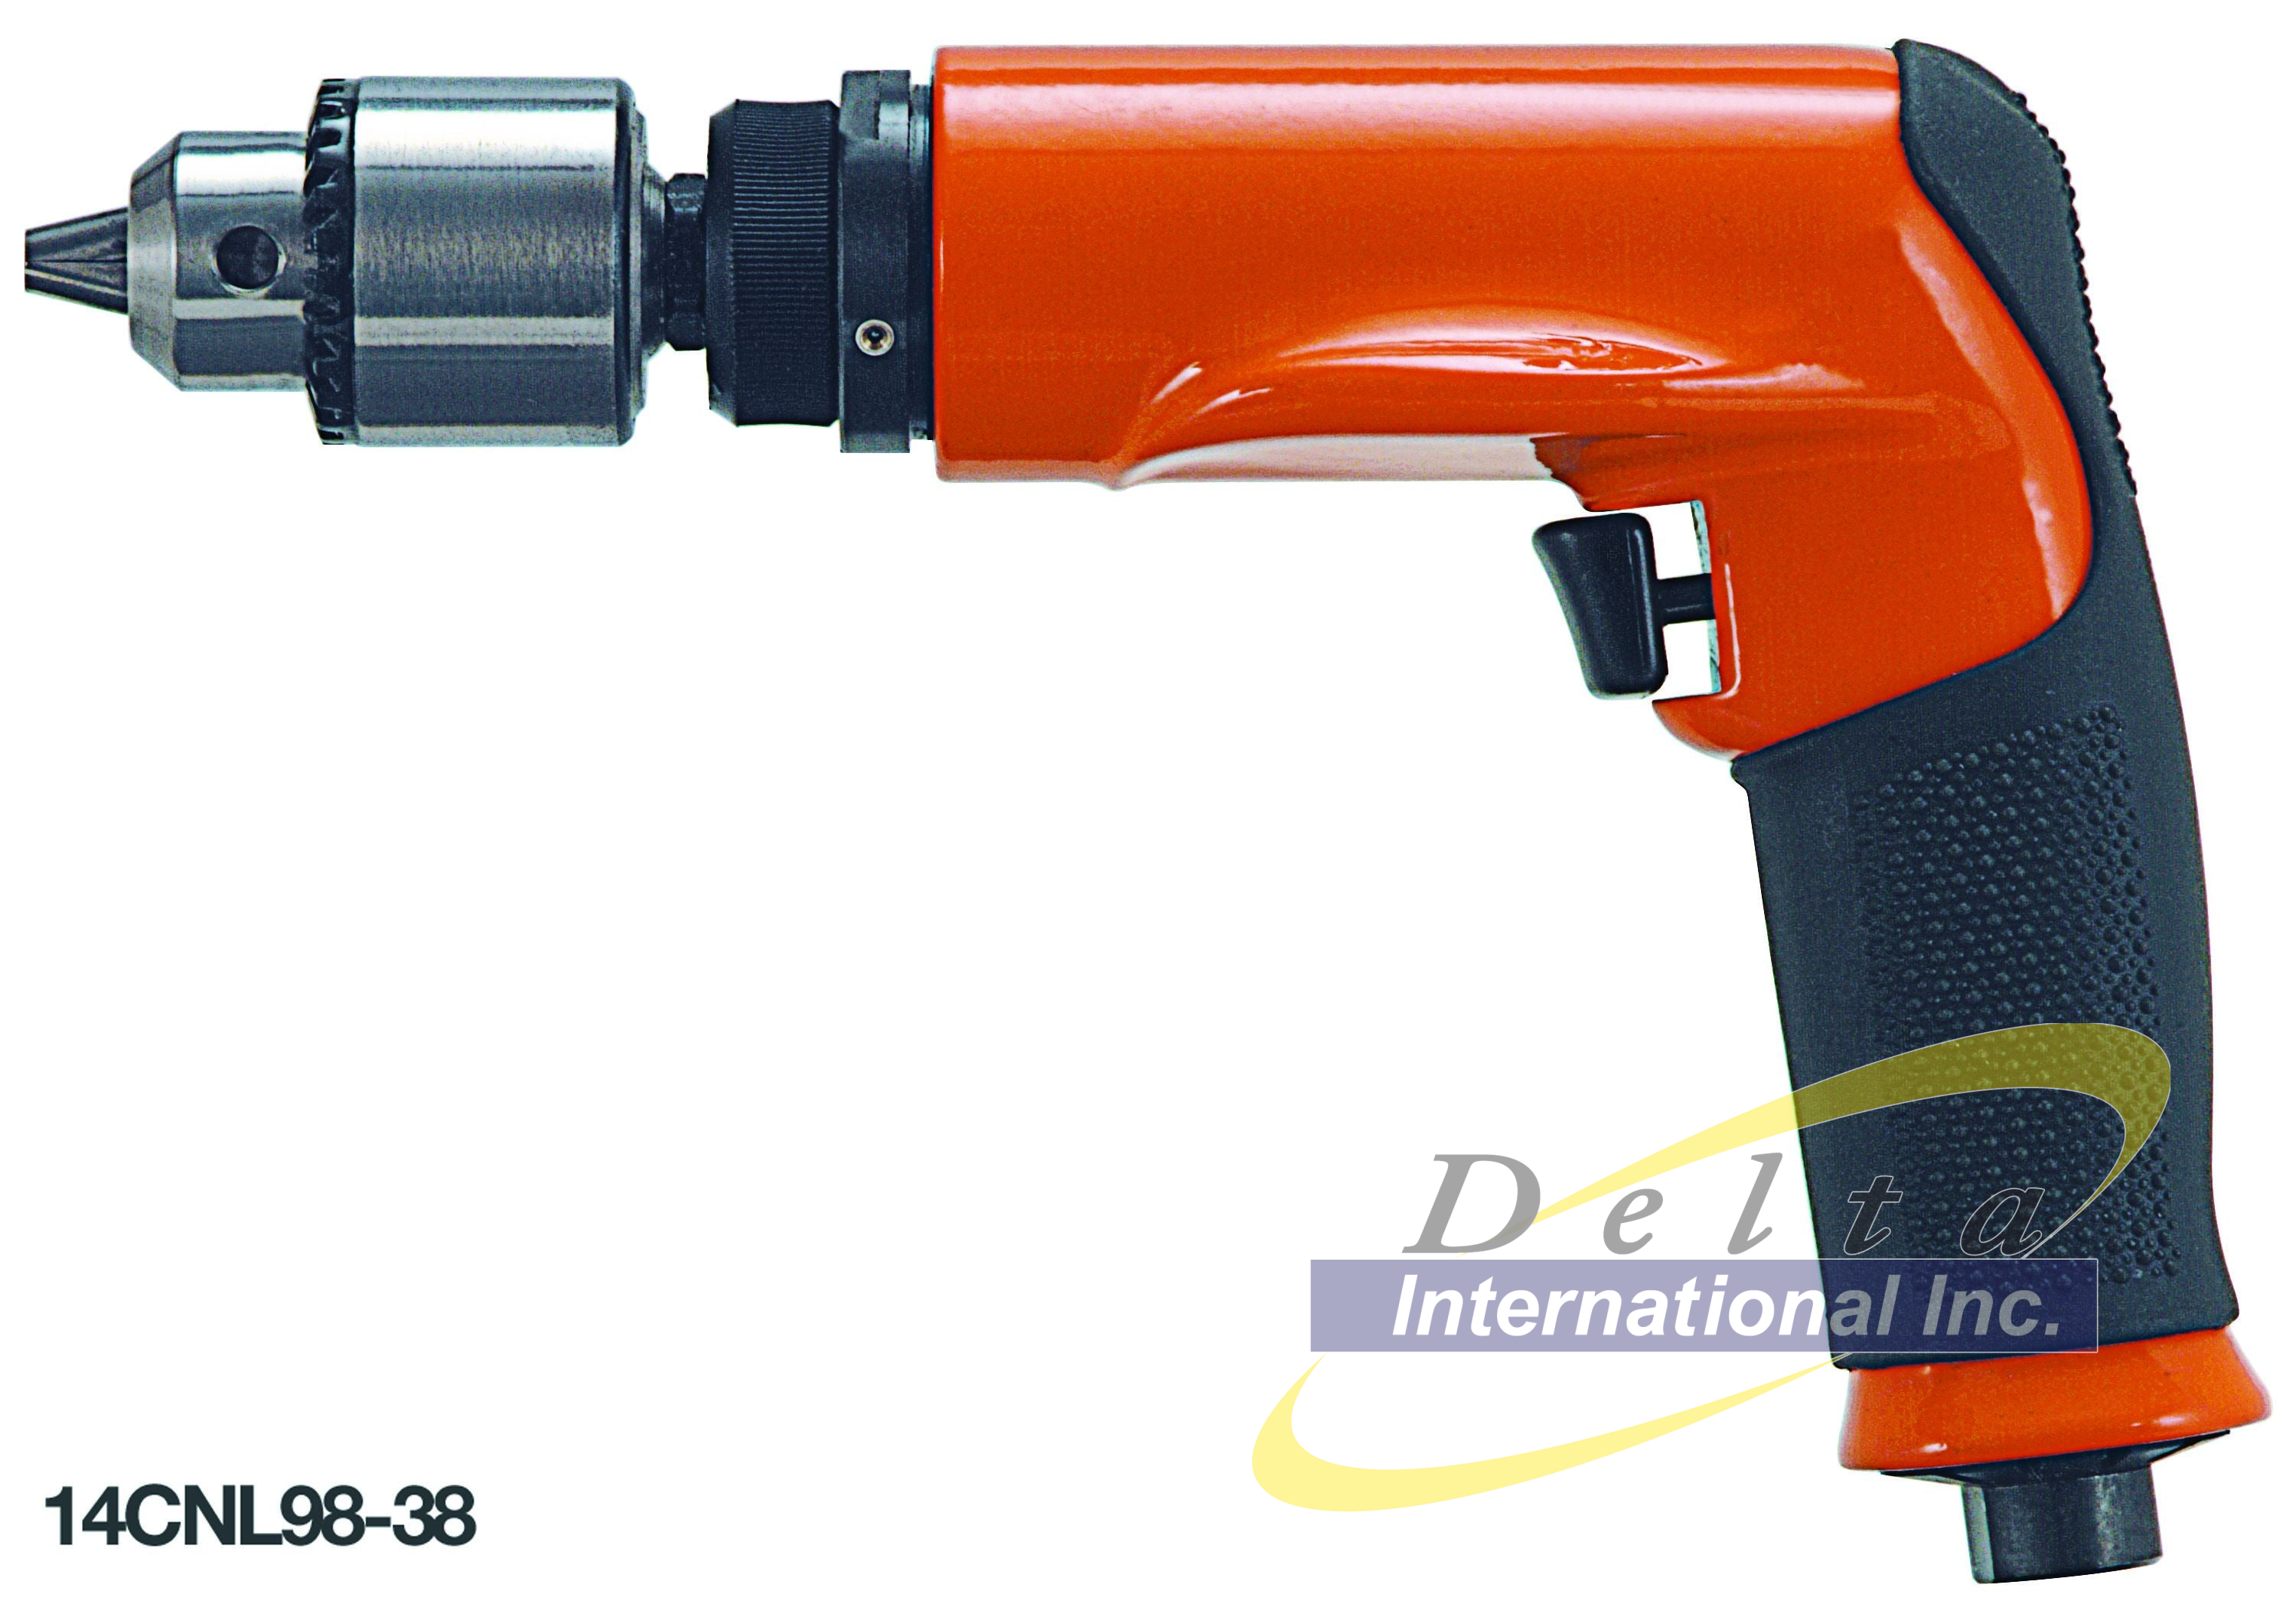 Cleco 14CNL95-51 - 14CN Series Pistol Drill Non-reversible